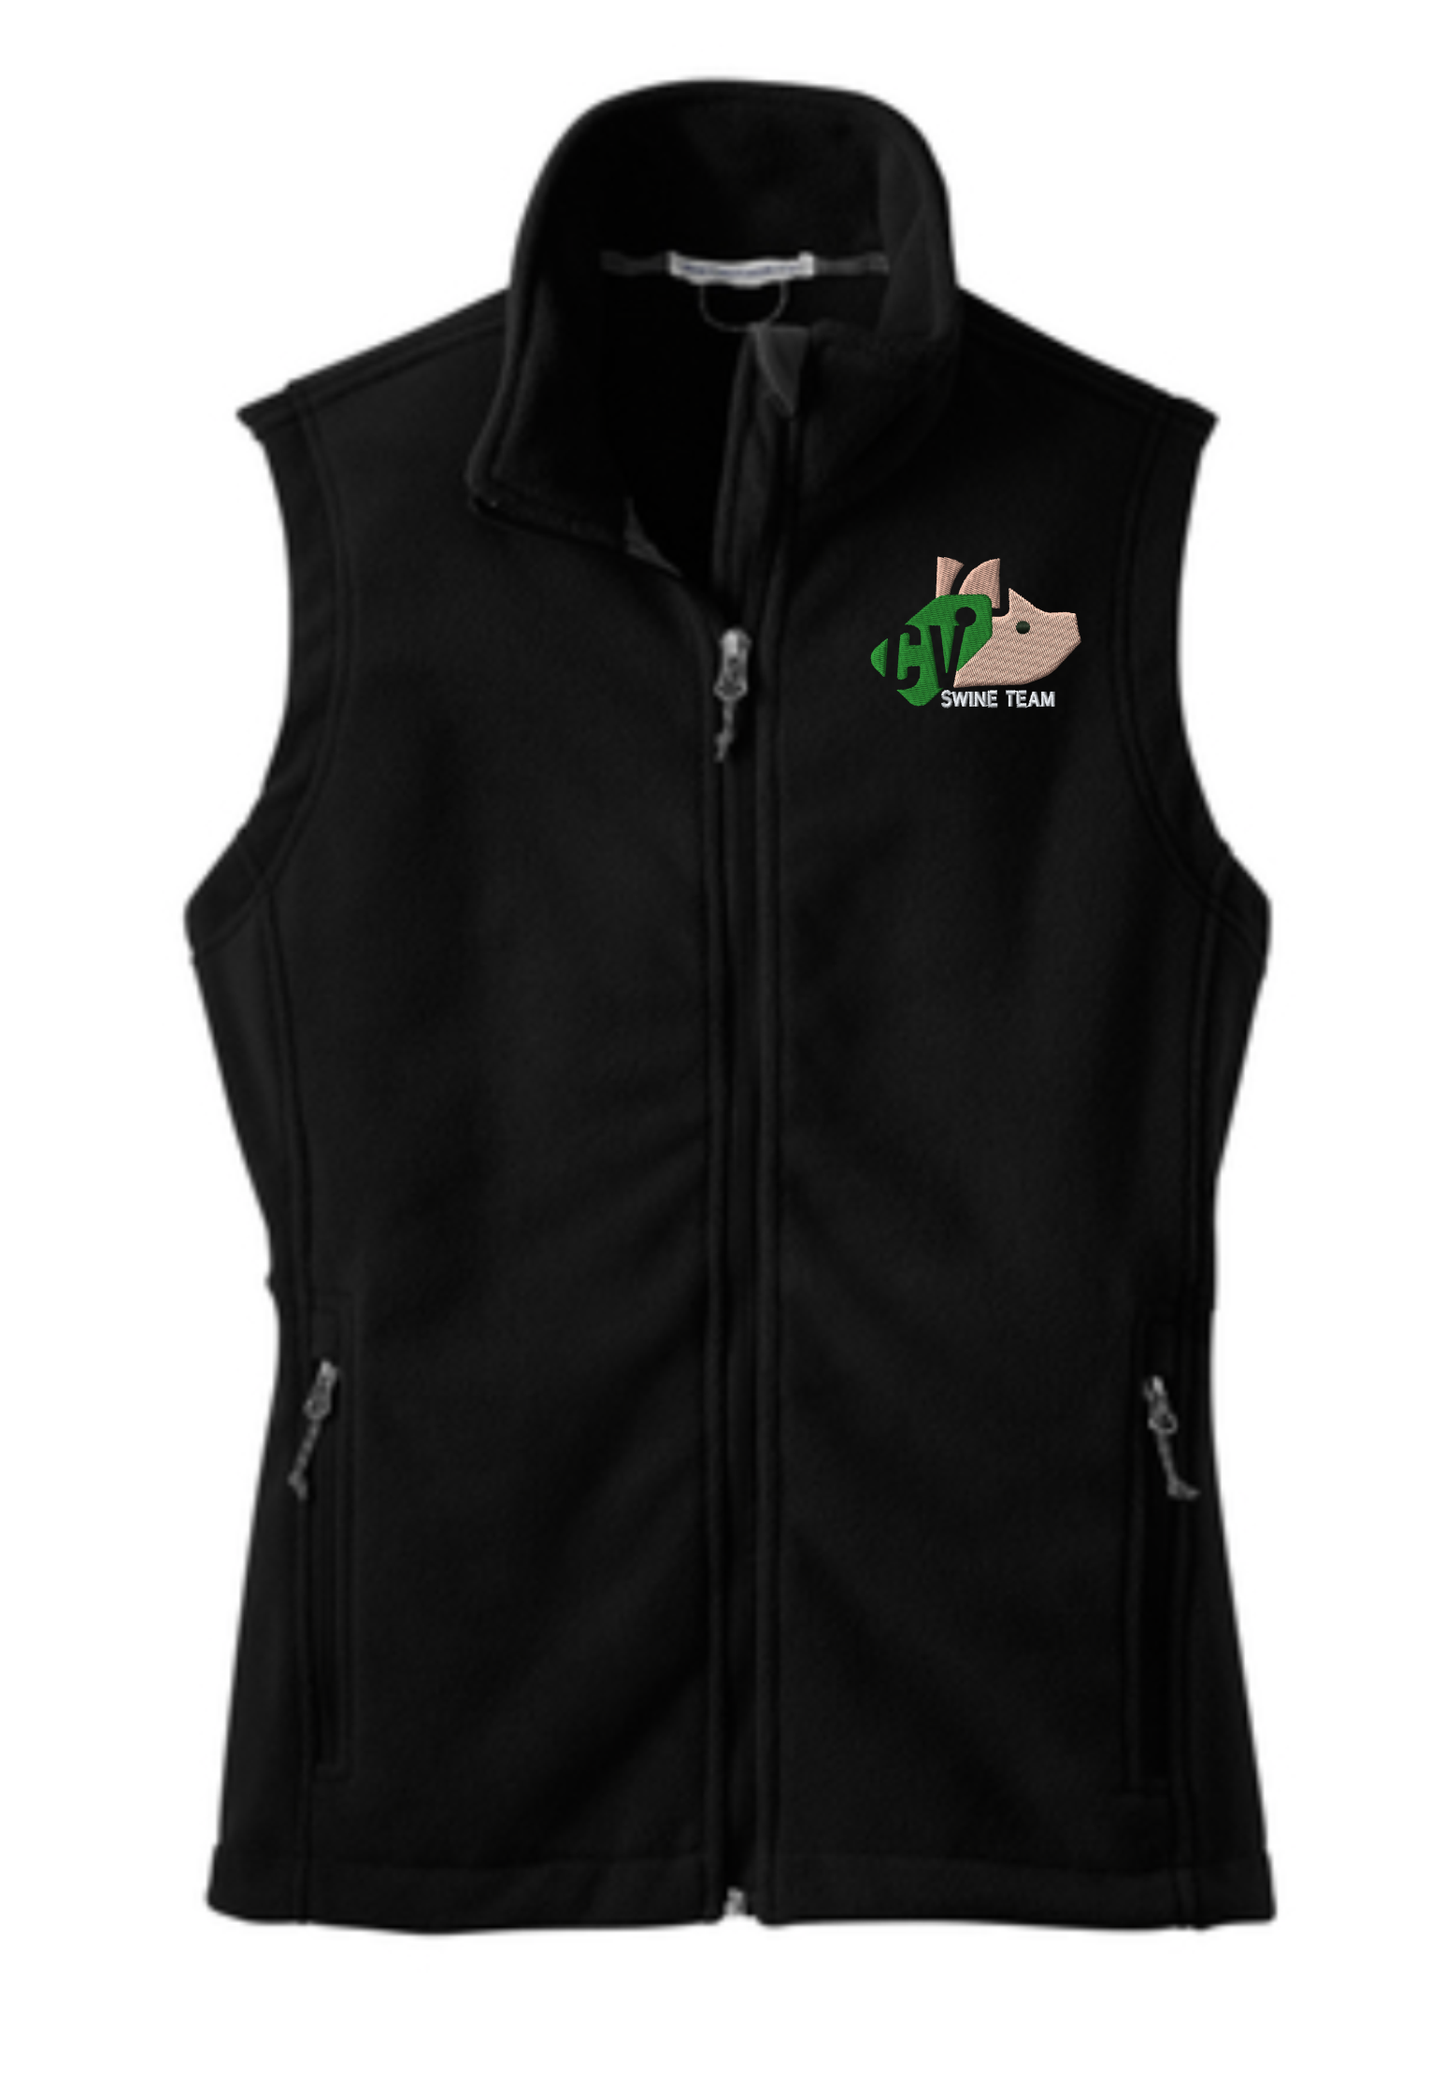 Carmel Valley 4-H Swine Team Women's Port Authority Fleece Vest